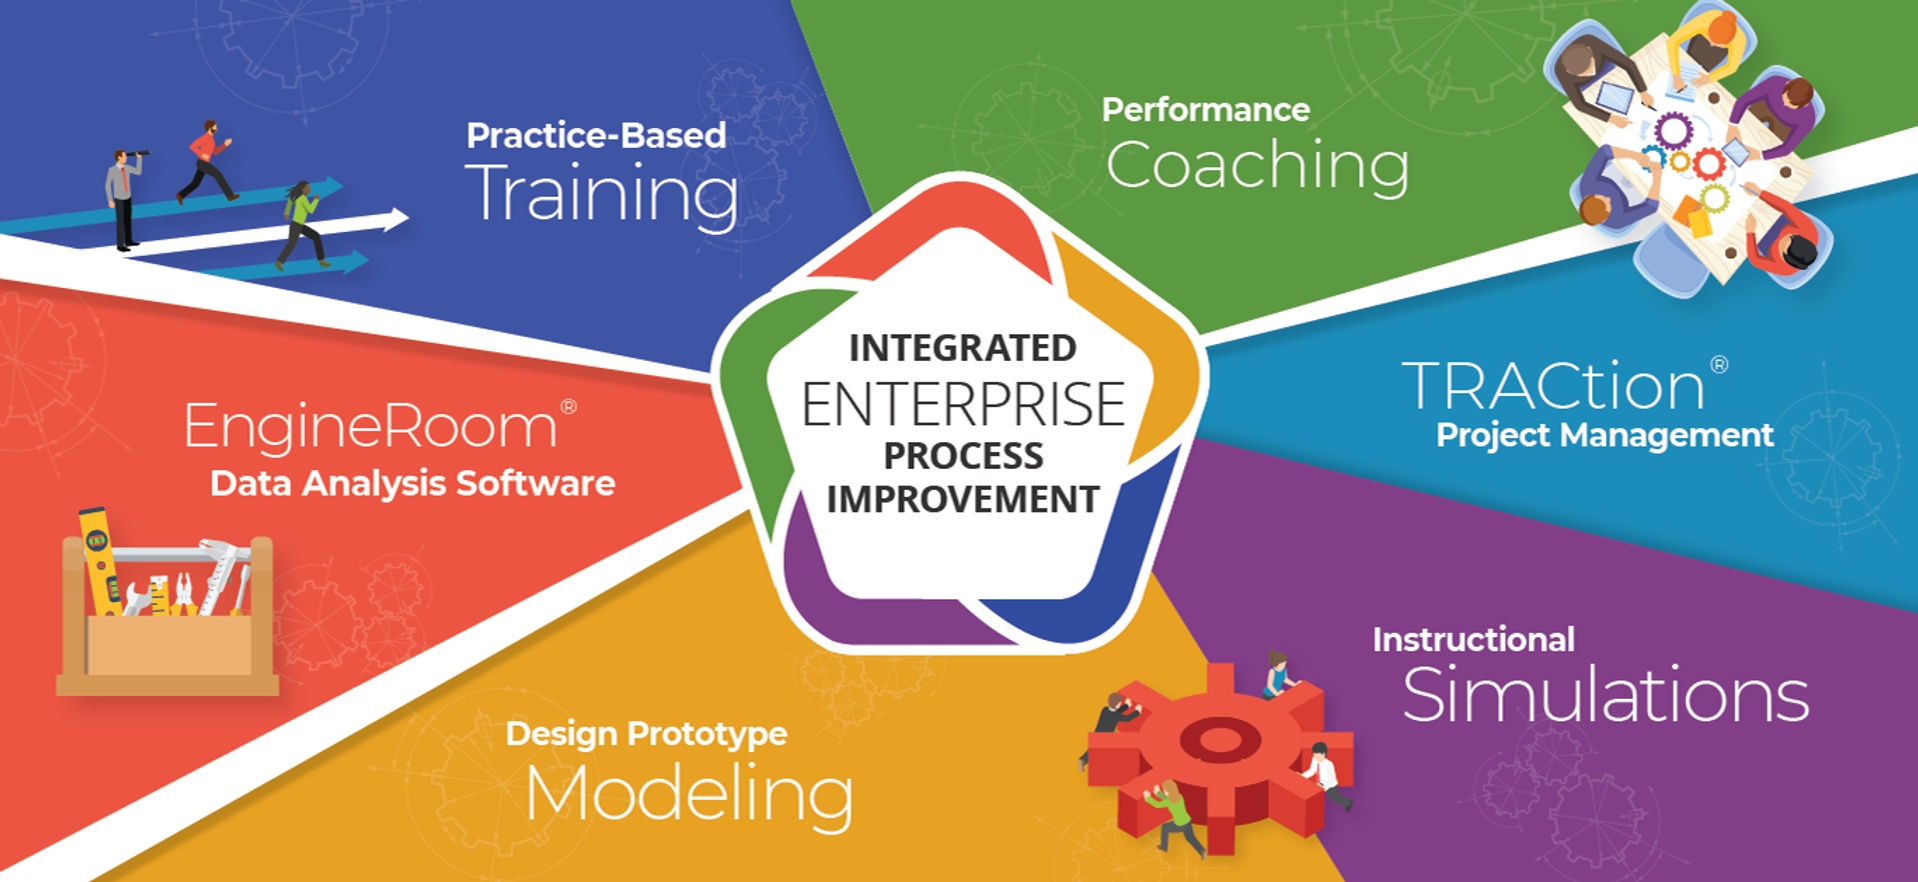 Integrated Enterprise Process Improvement